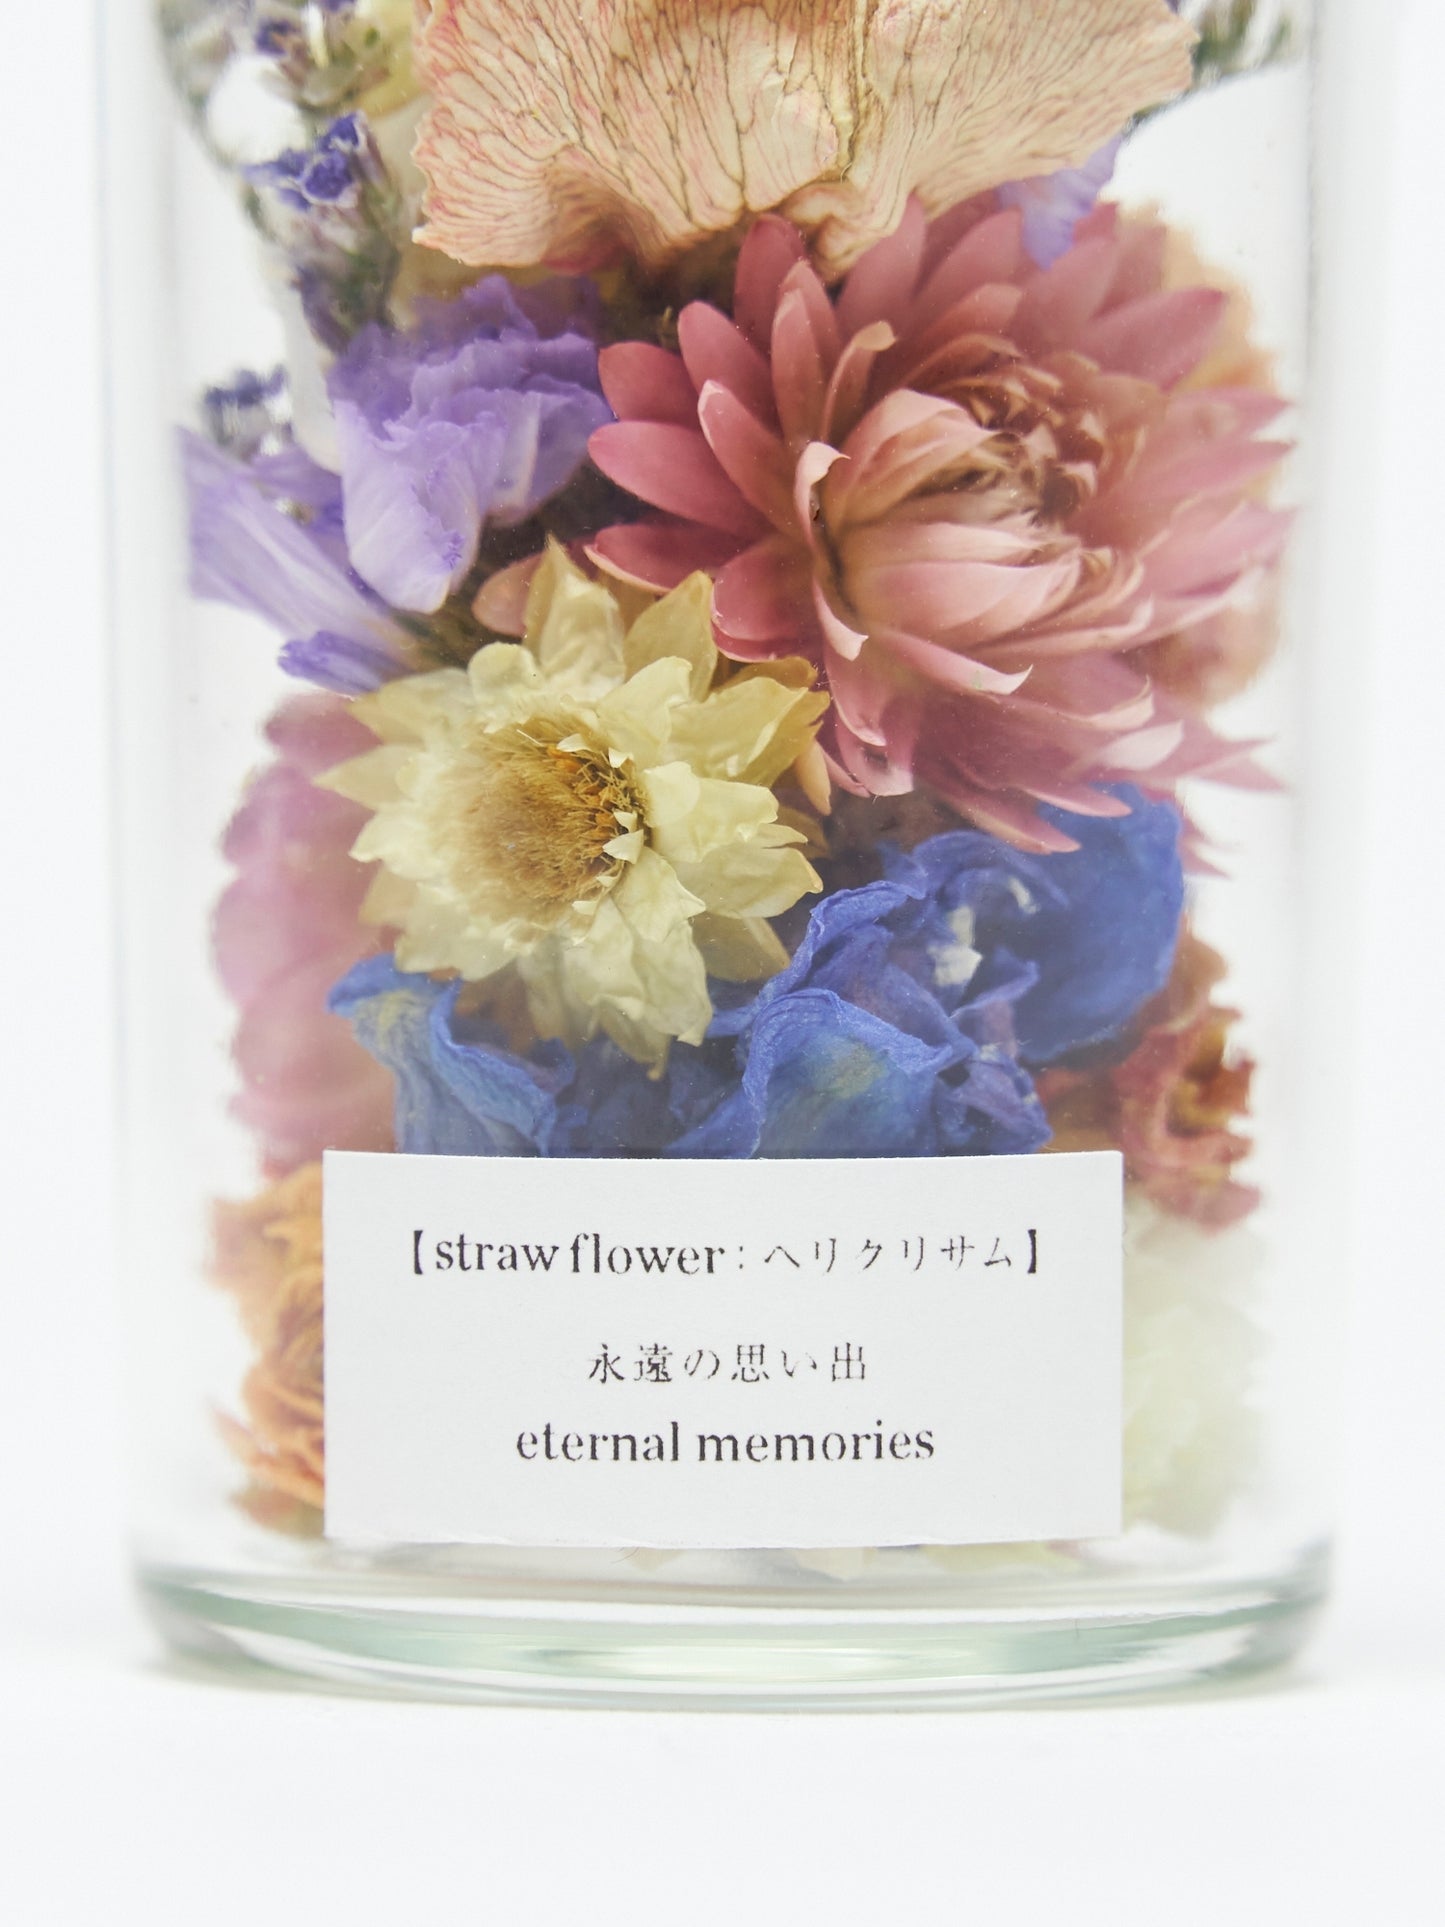 Flower language mini bottle "straw flower"